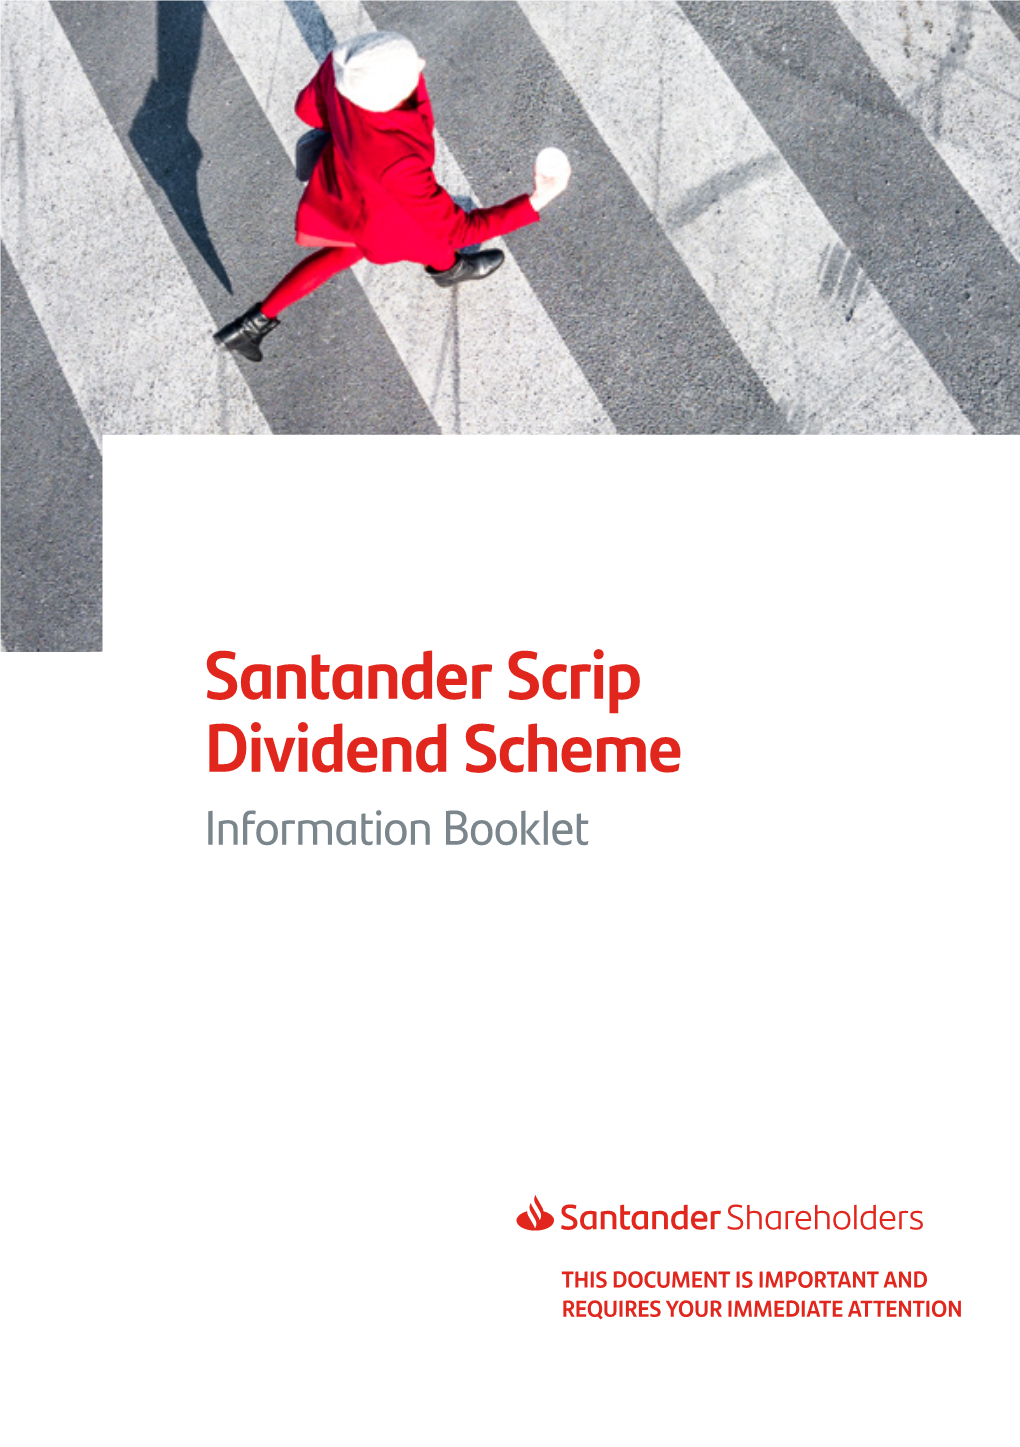 Santander Scrip Dividend Scheme Information Booklet